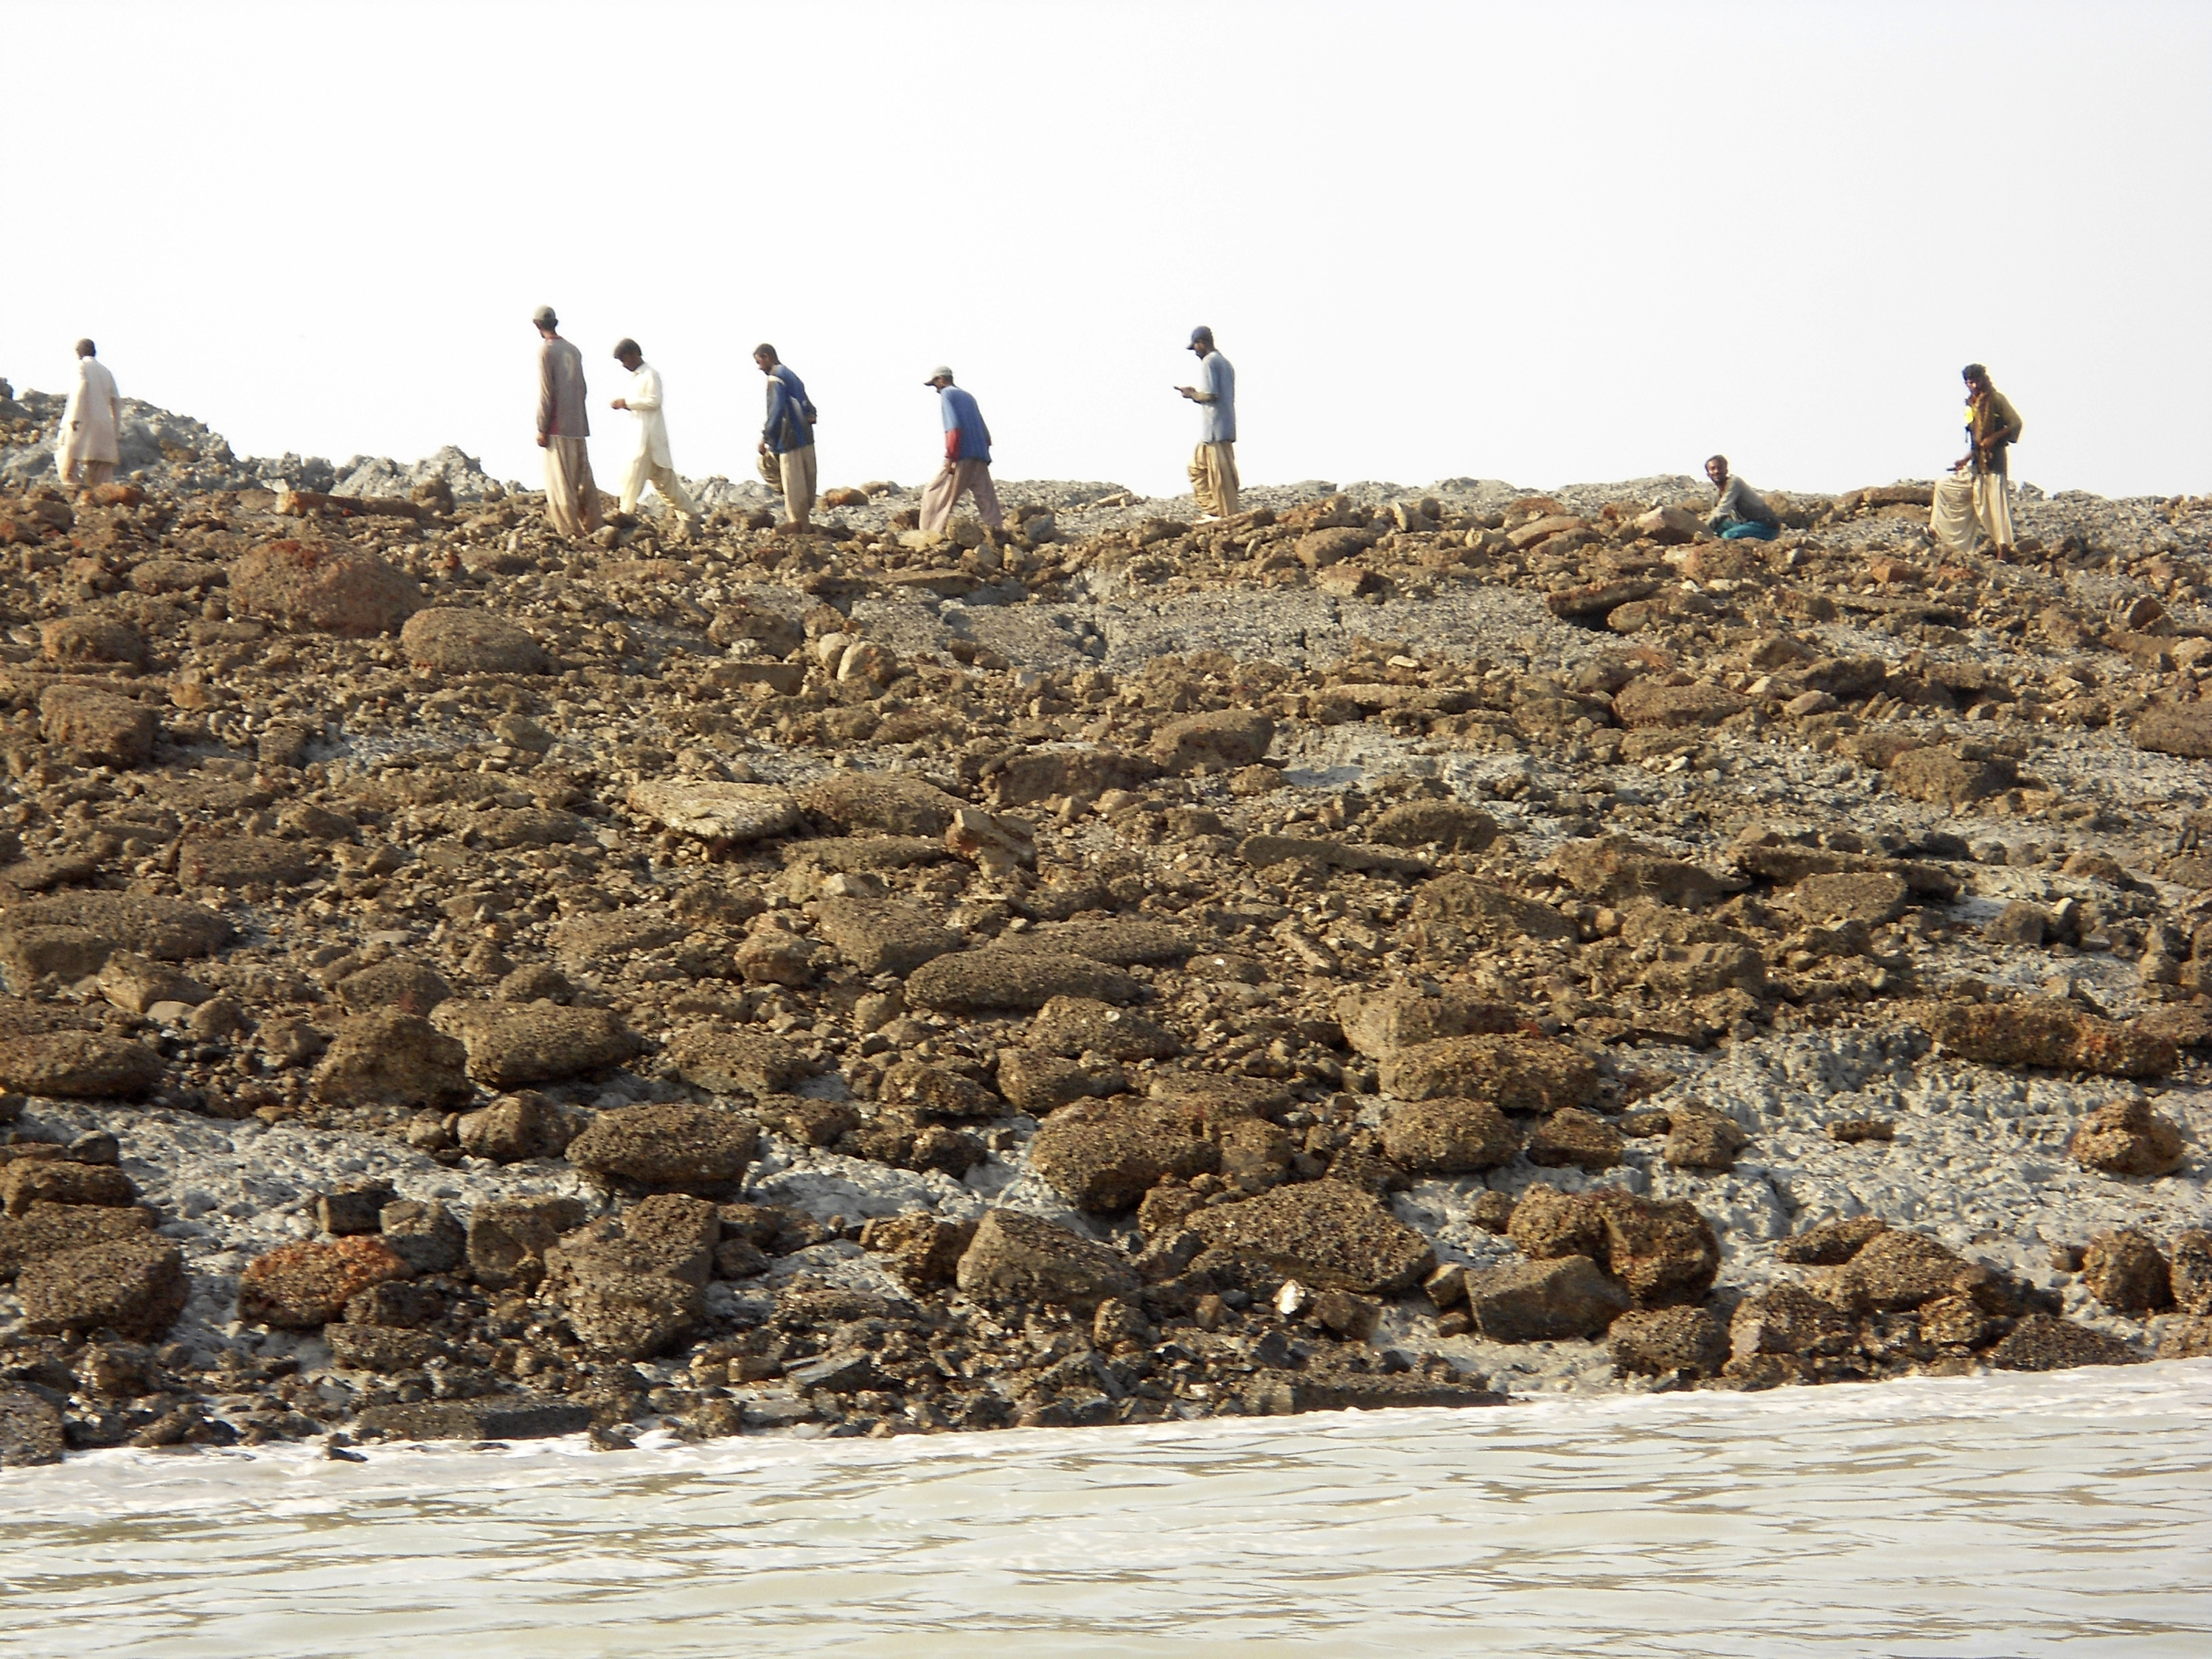 People walk on an island that rose from the sea following an earthquake, off Pakistan's Gwadar coastline in the Arabian Sea